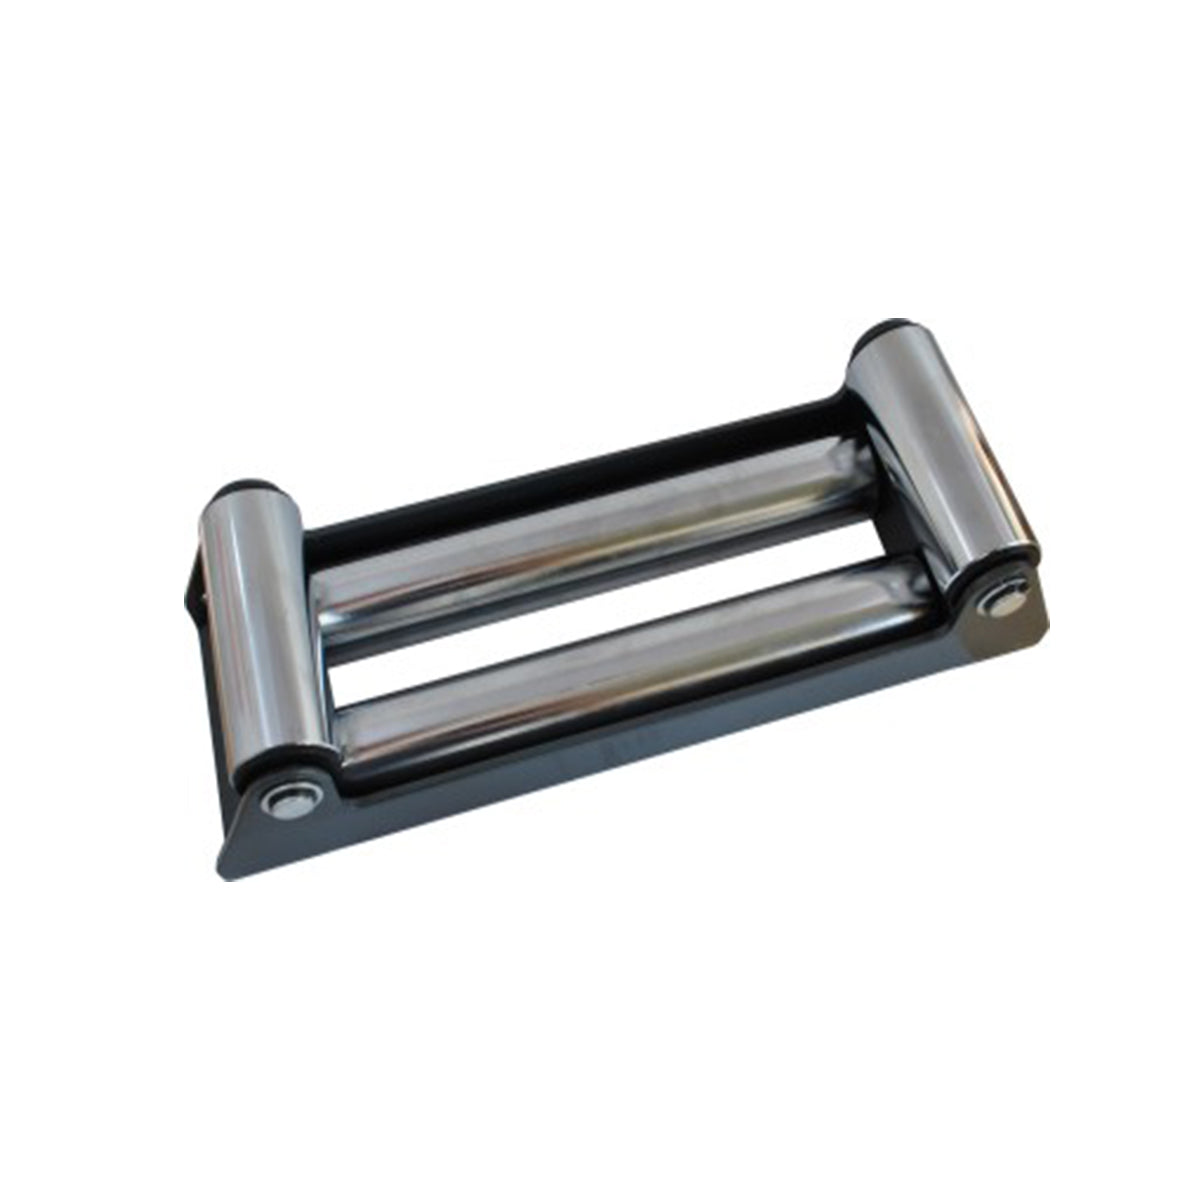 S/Steel Roller Fairlead - RFS150-CAD